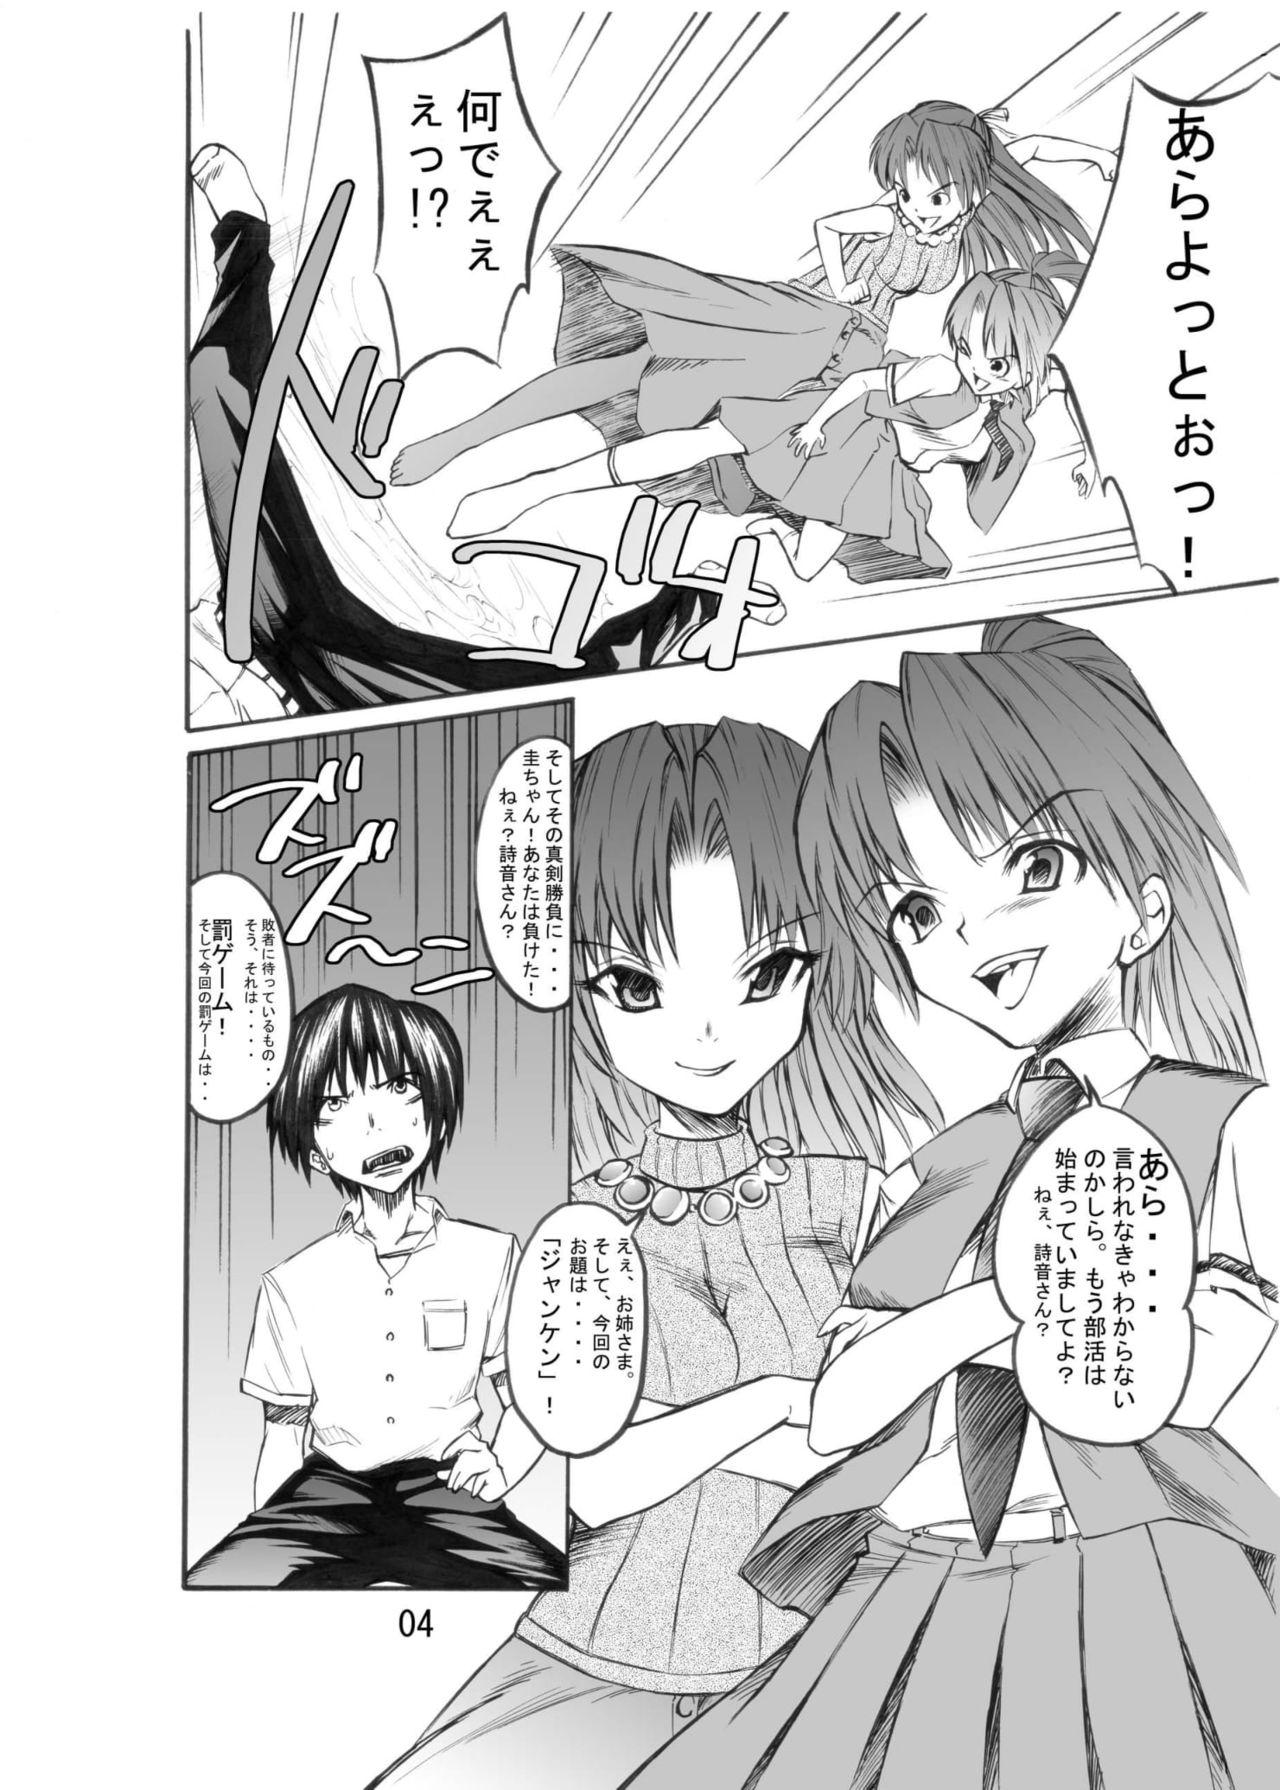 Latino Higurashi May Cry? - Higurashi no naku koro ni Lesbians - Page 4